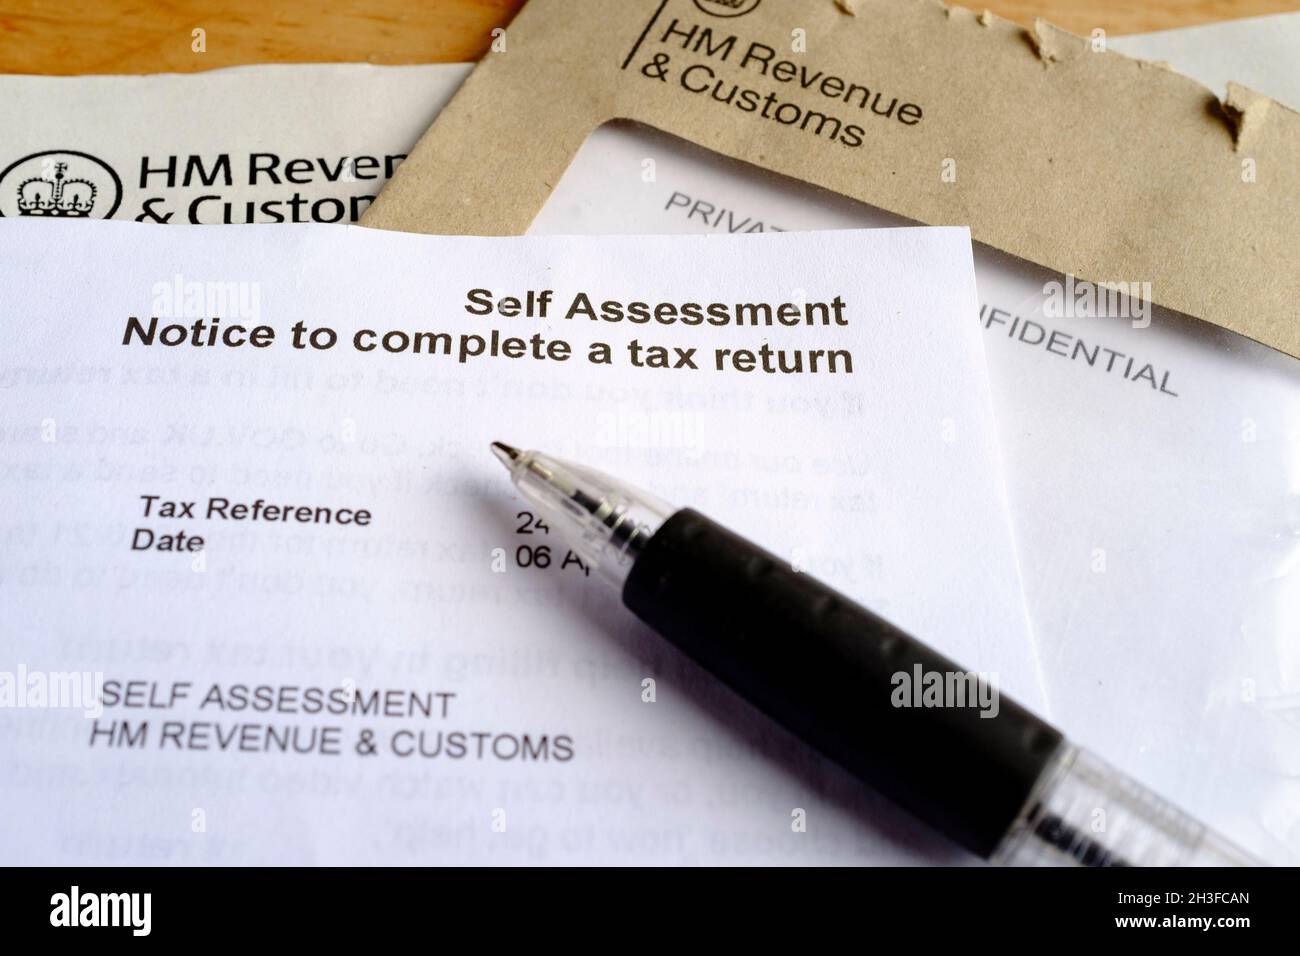 hm-revenue-and-customs-self-assessment-tax-return-notice-united